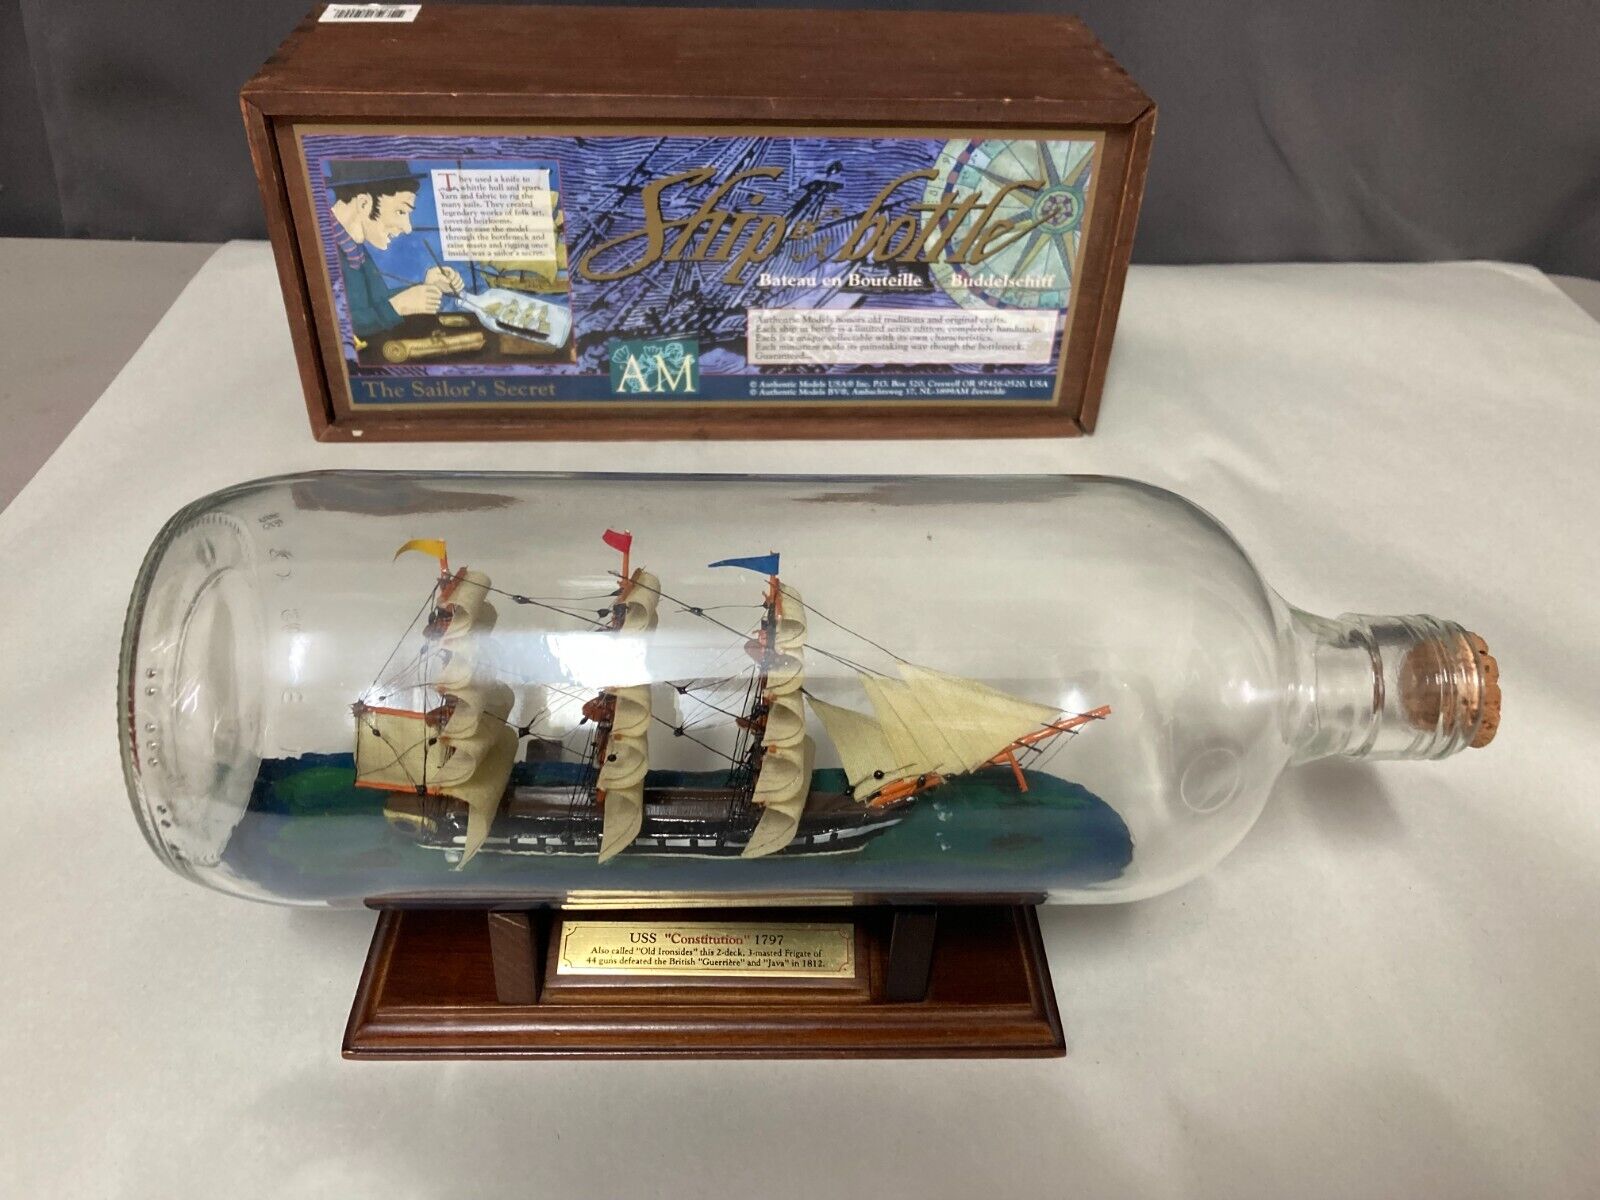 AUTHENTIC MODELS * The Sailors Secret * Ship in a Bottle * USS Constitution 1797